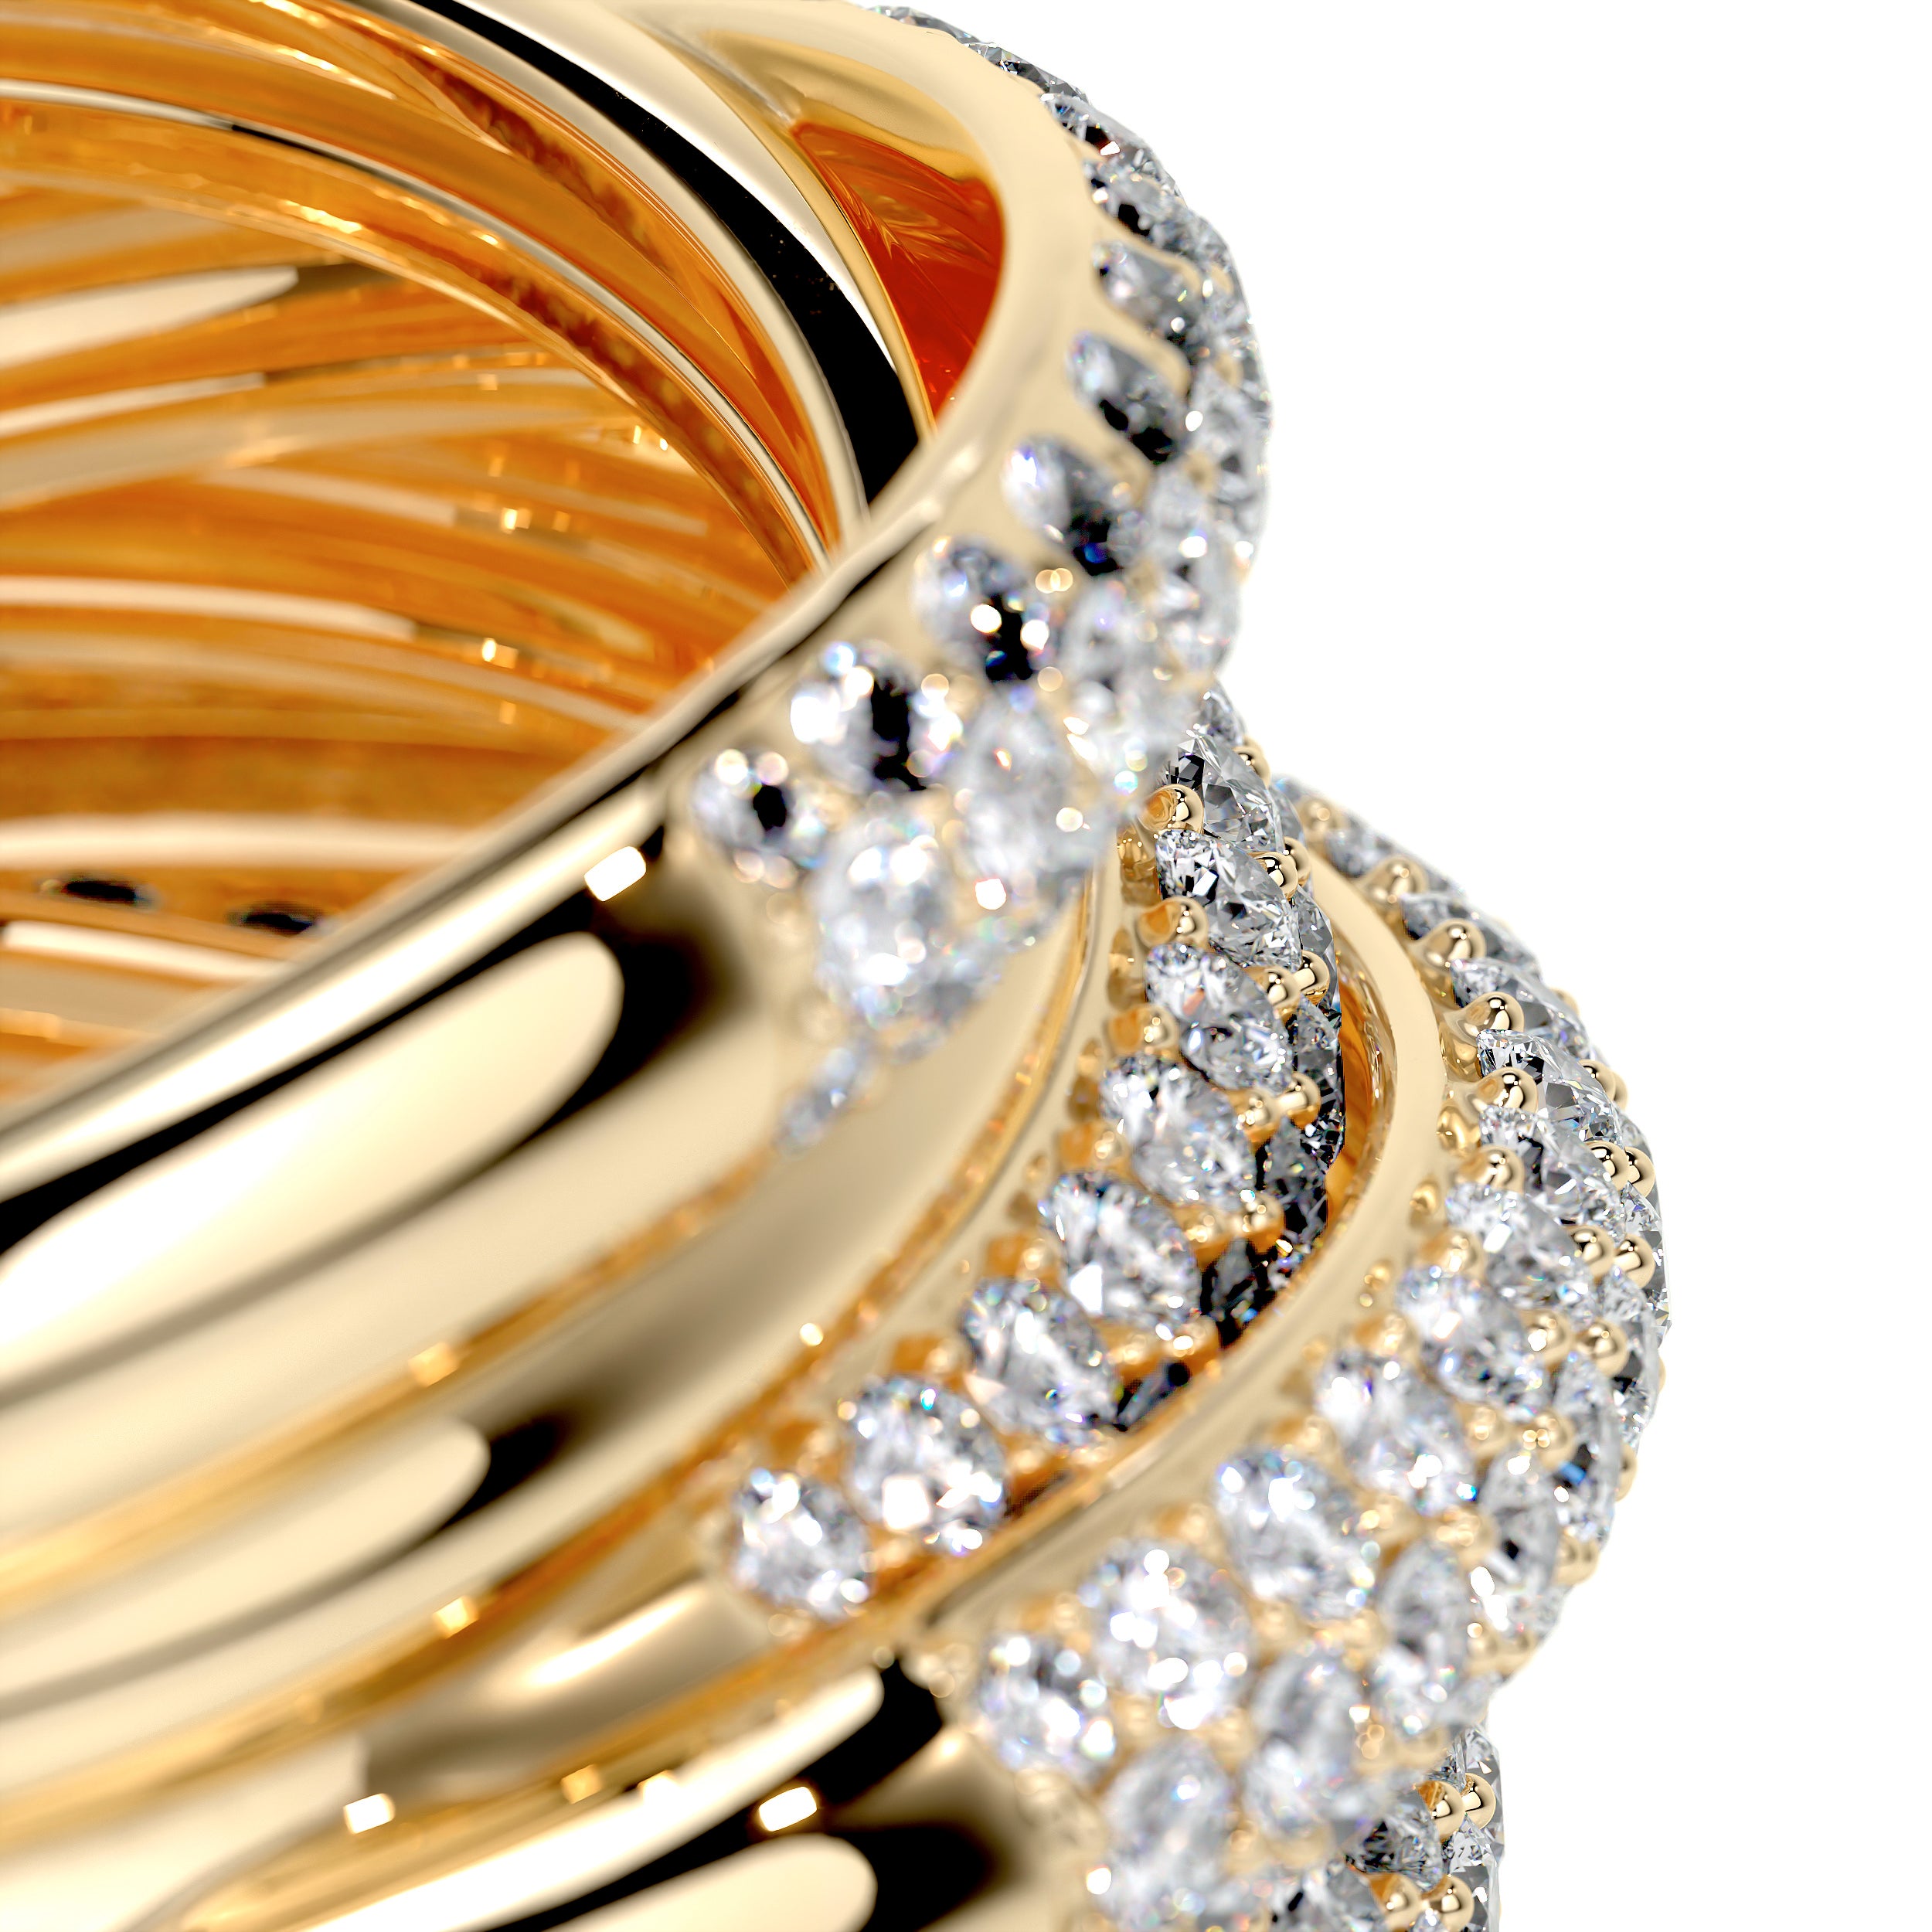 Aurora Diamond Wedding Ring   (3 Carat) -18K Yellow Gold